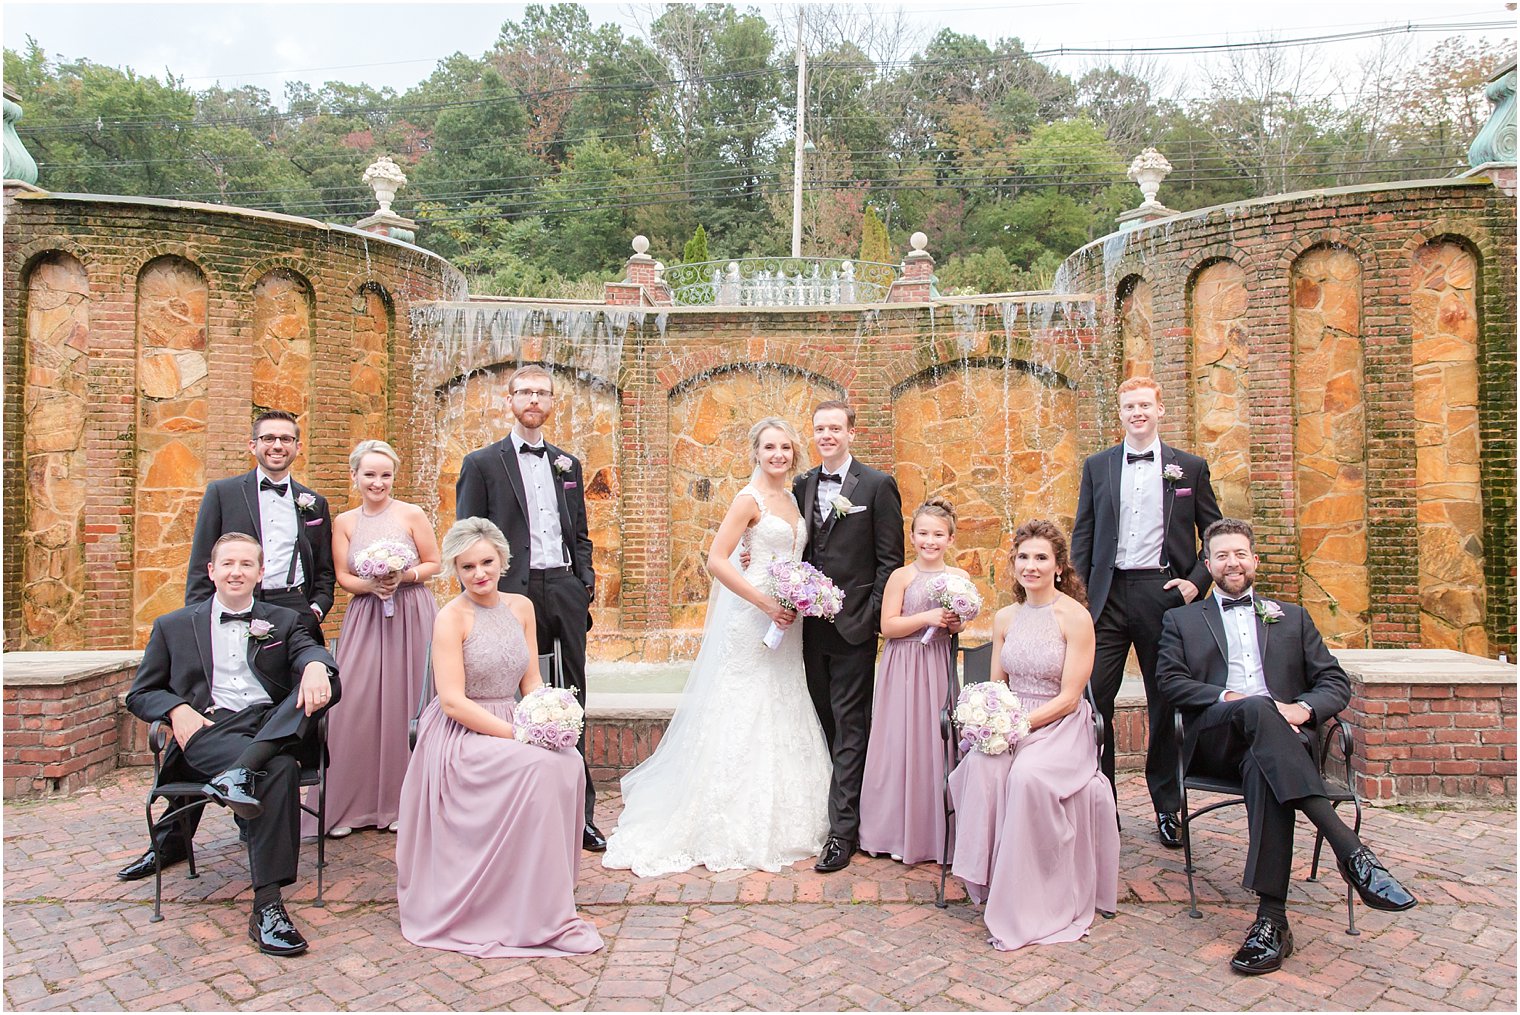 Seated bridal party photo at The Manor | West Orange, NJ